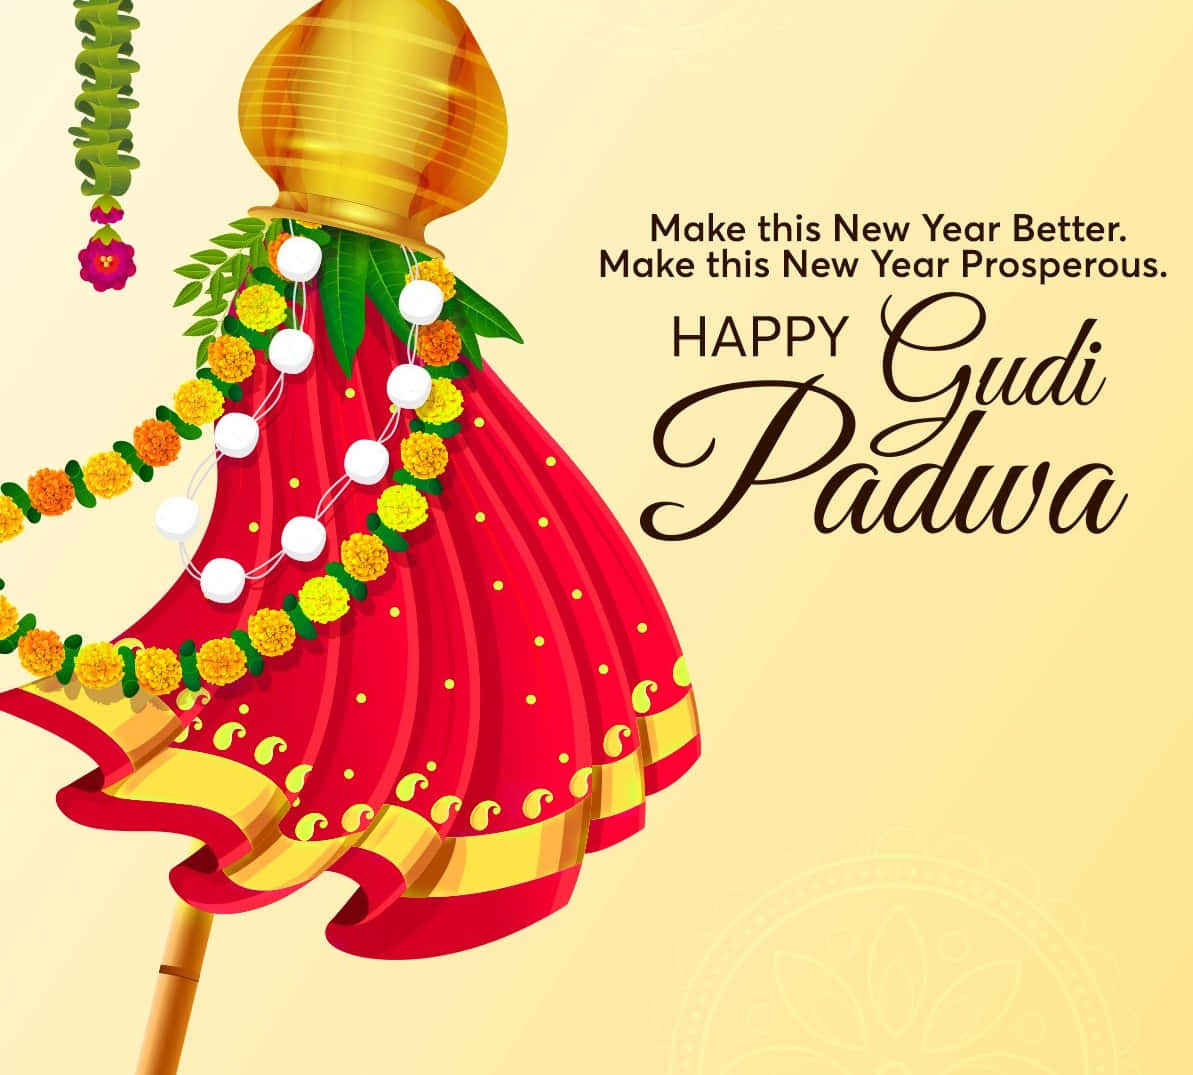 Celebrate Gudi Padwa with Joy and Happiness